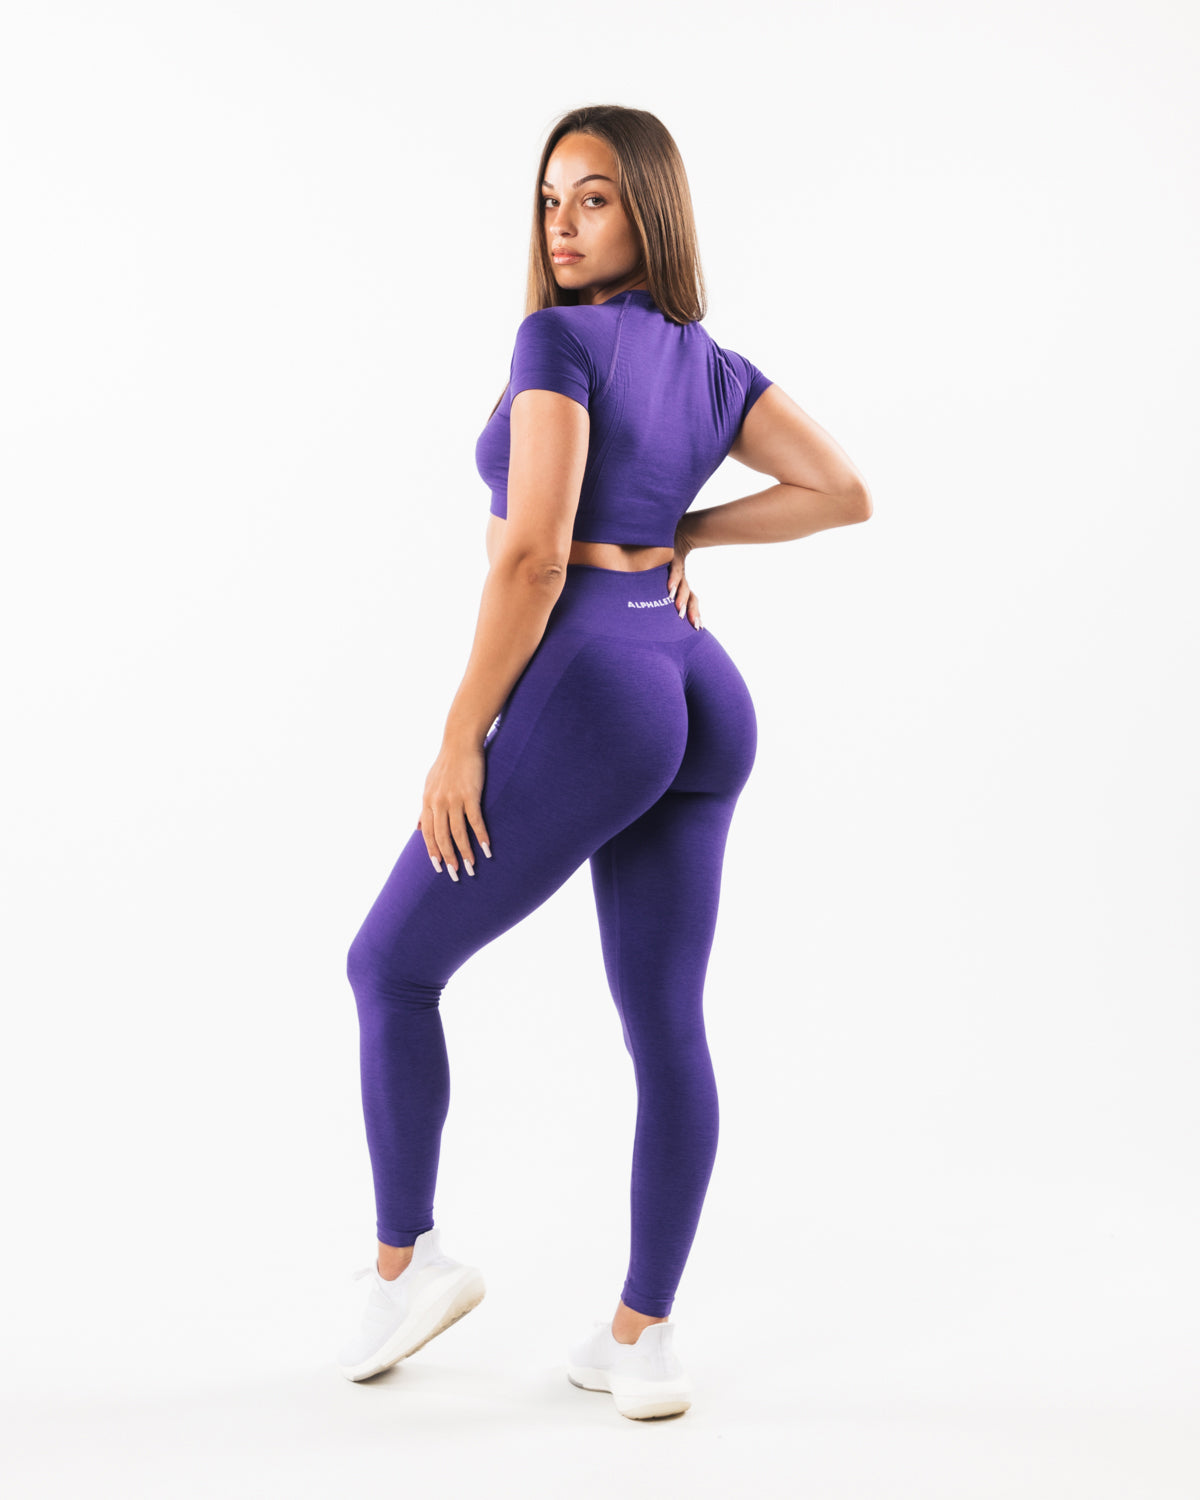 NWOT Alphalete Amplify Purple Dove Leggings - Athletic apparel